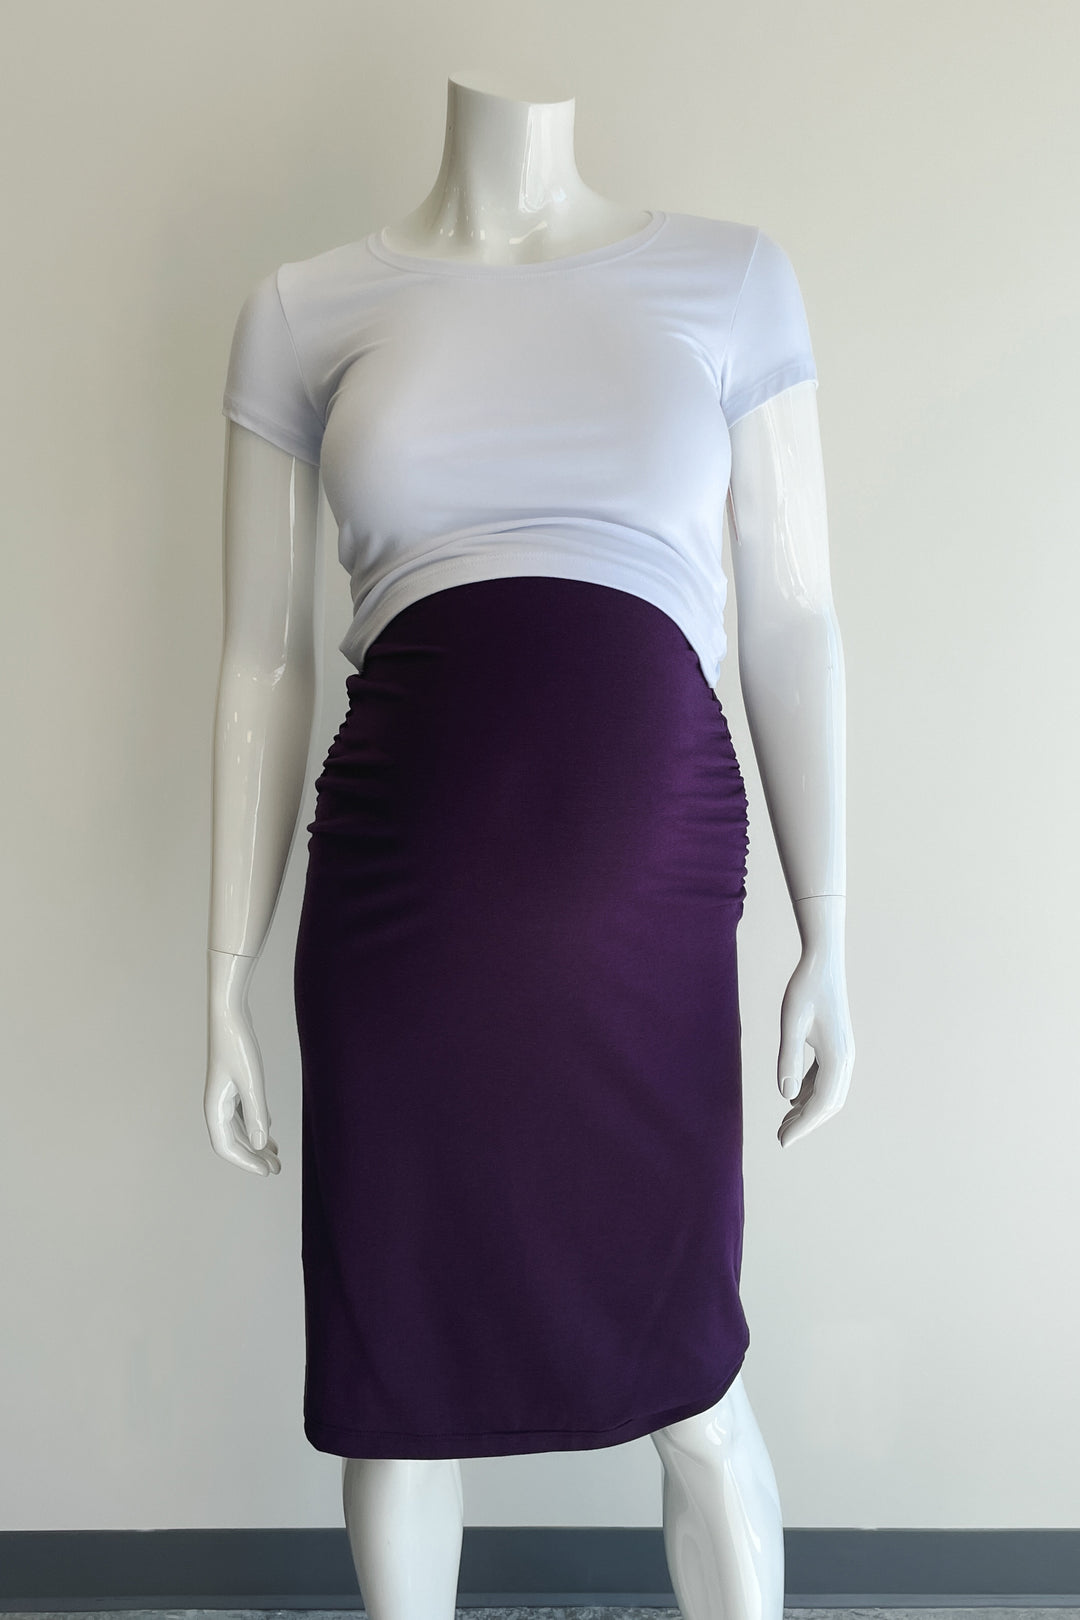 Fionna Maternity Skirt, purple